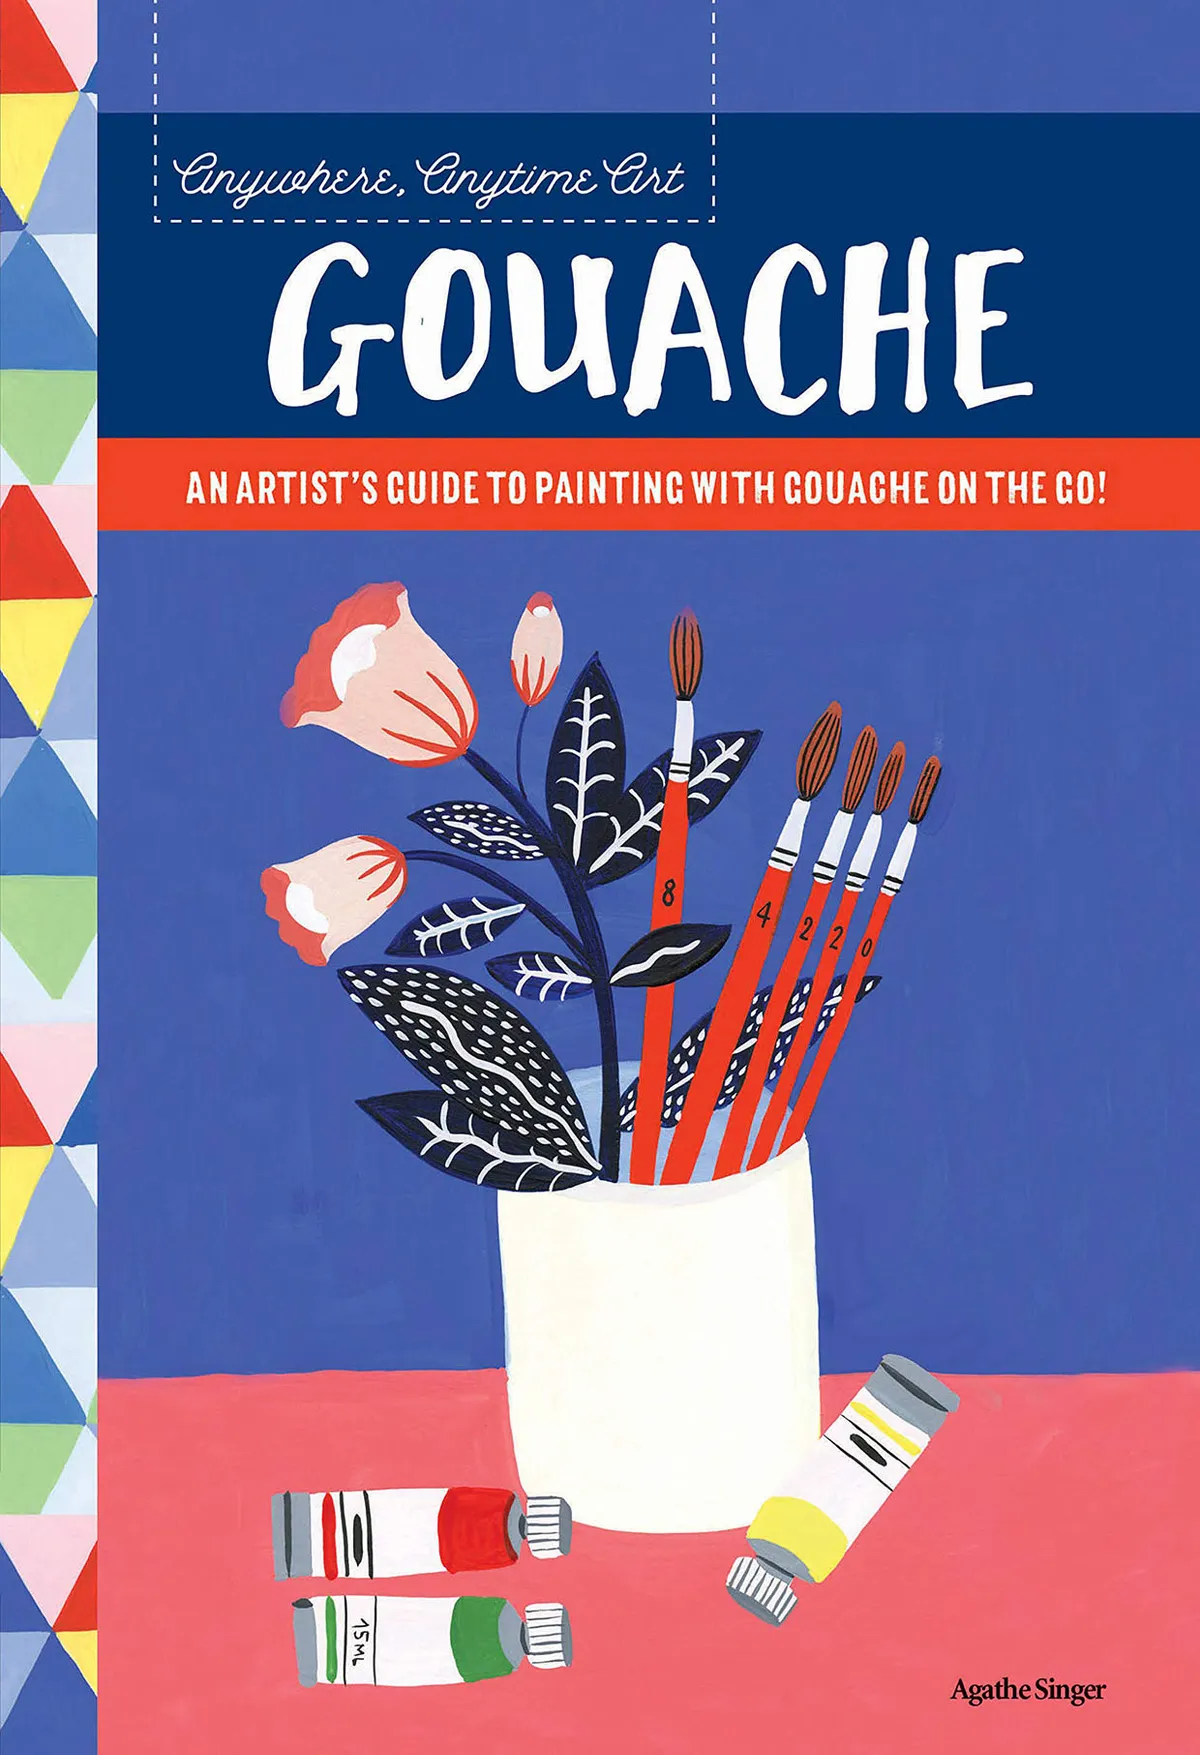 Anywhere Anytime Art Gouache by Agathe Singer